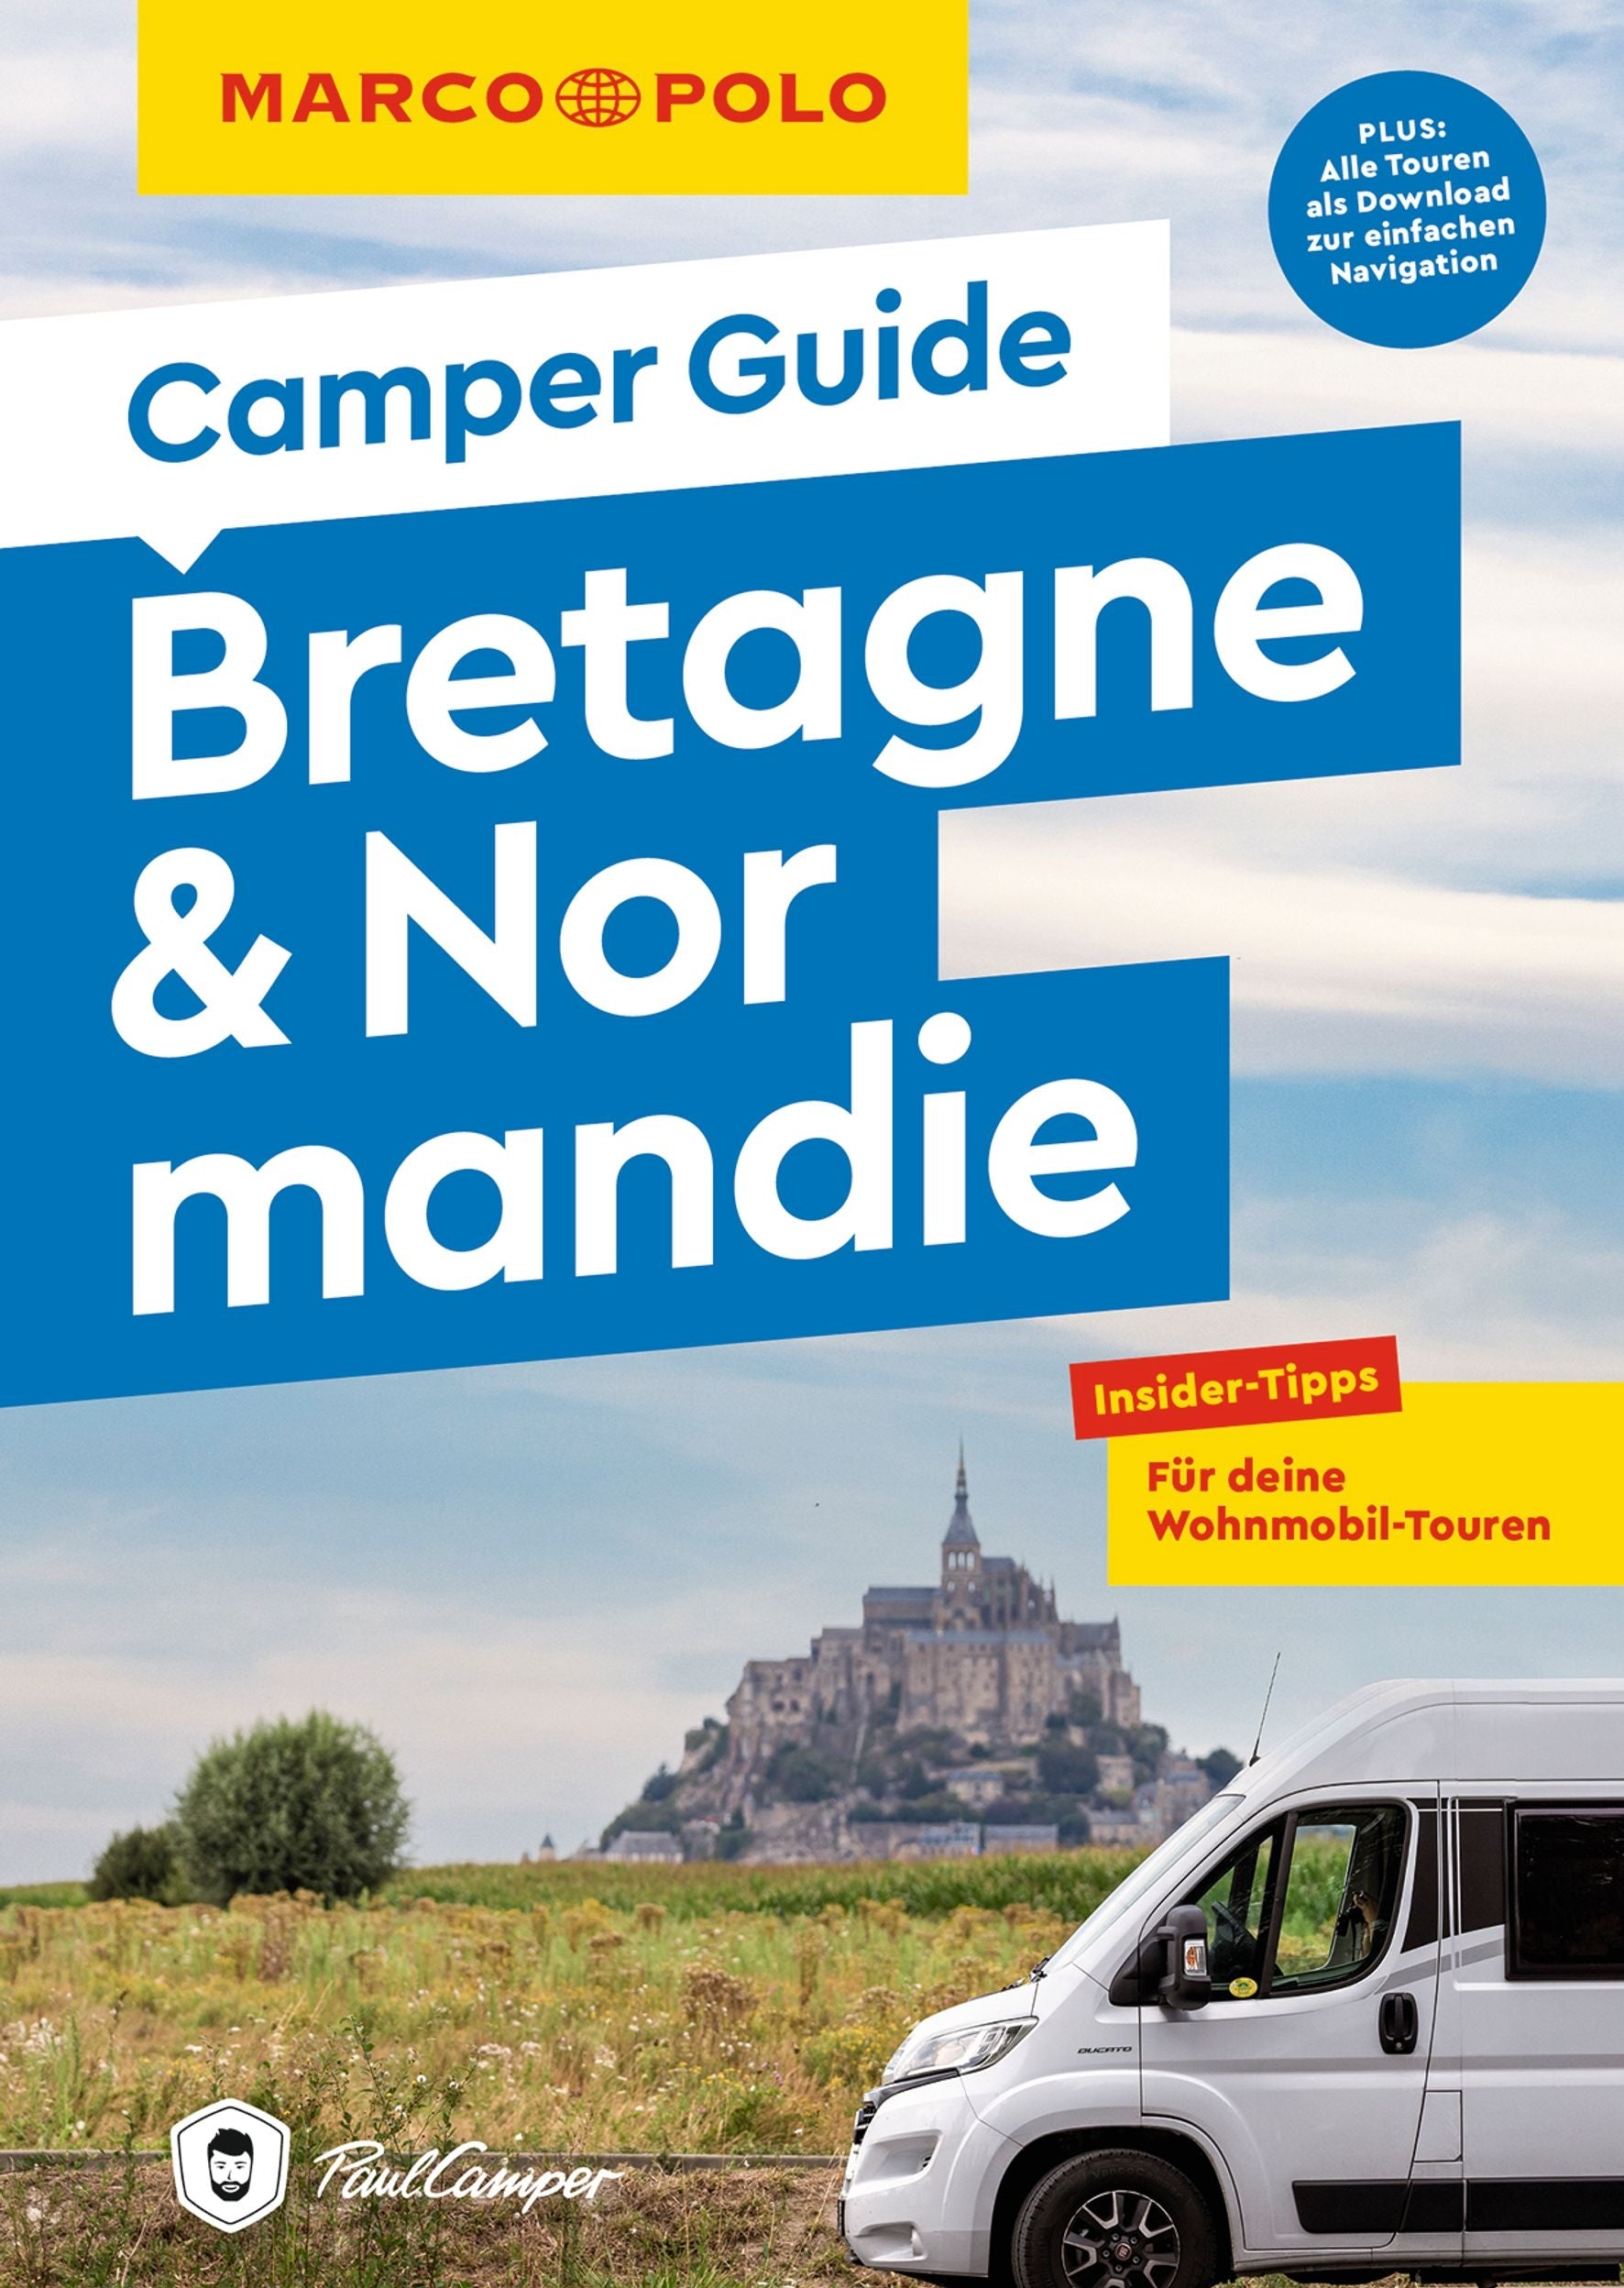 Camper Guide Bretagne & Normandie